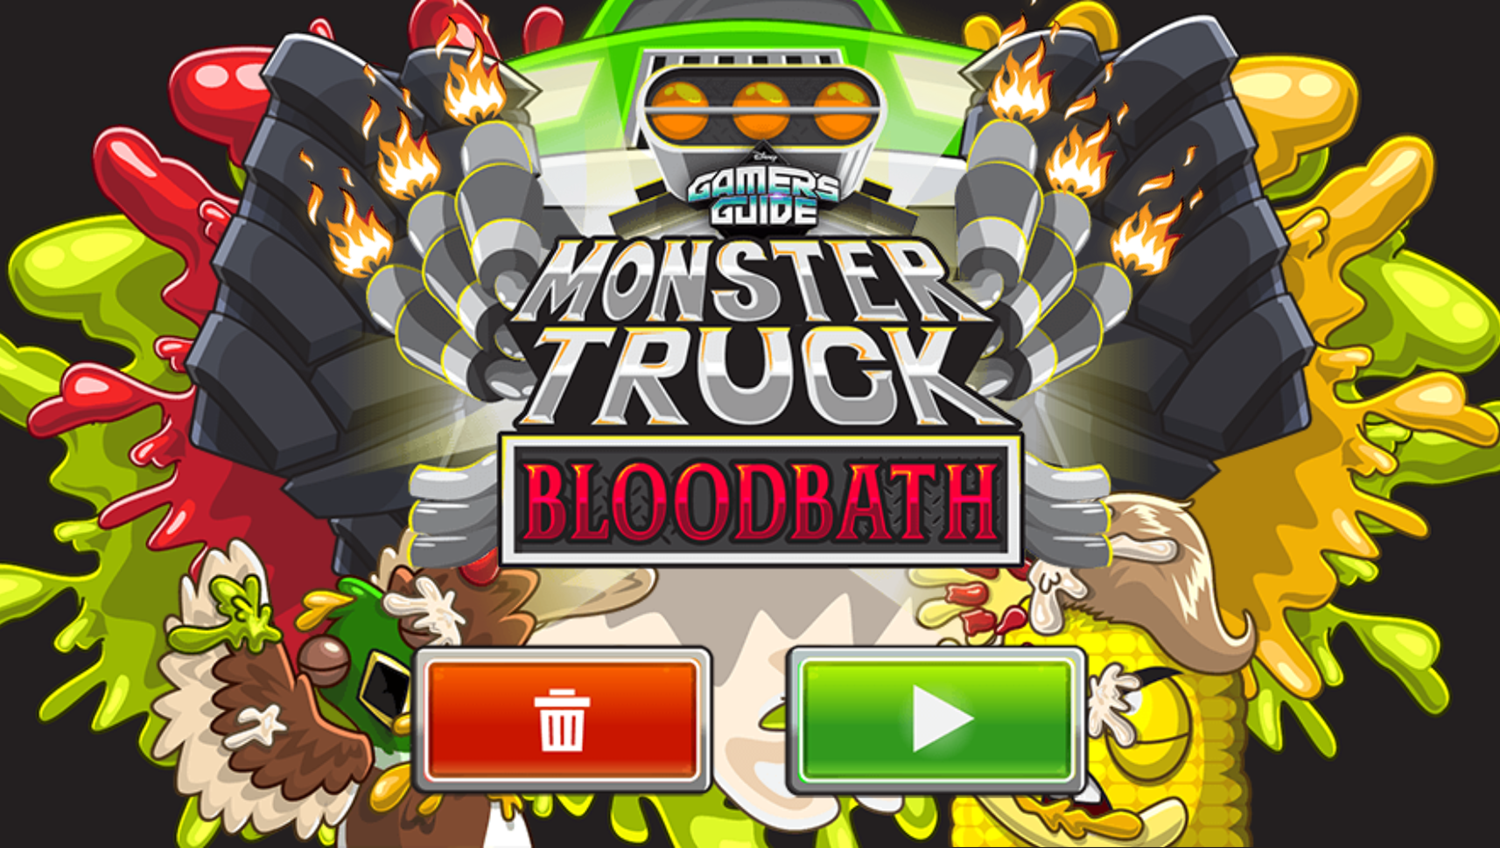 Gamer's Guide Monster Truck Bloodbath Game Welcome Screen Screenshot.